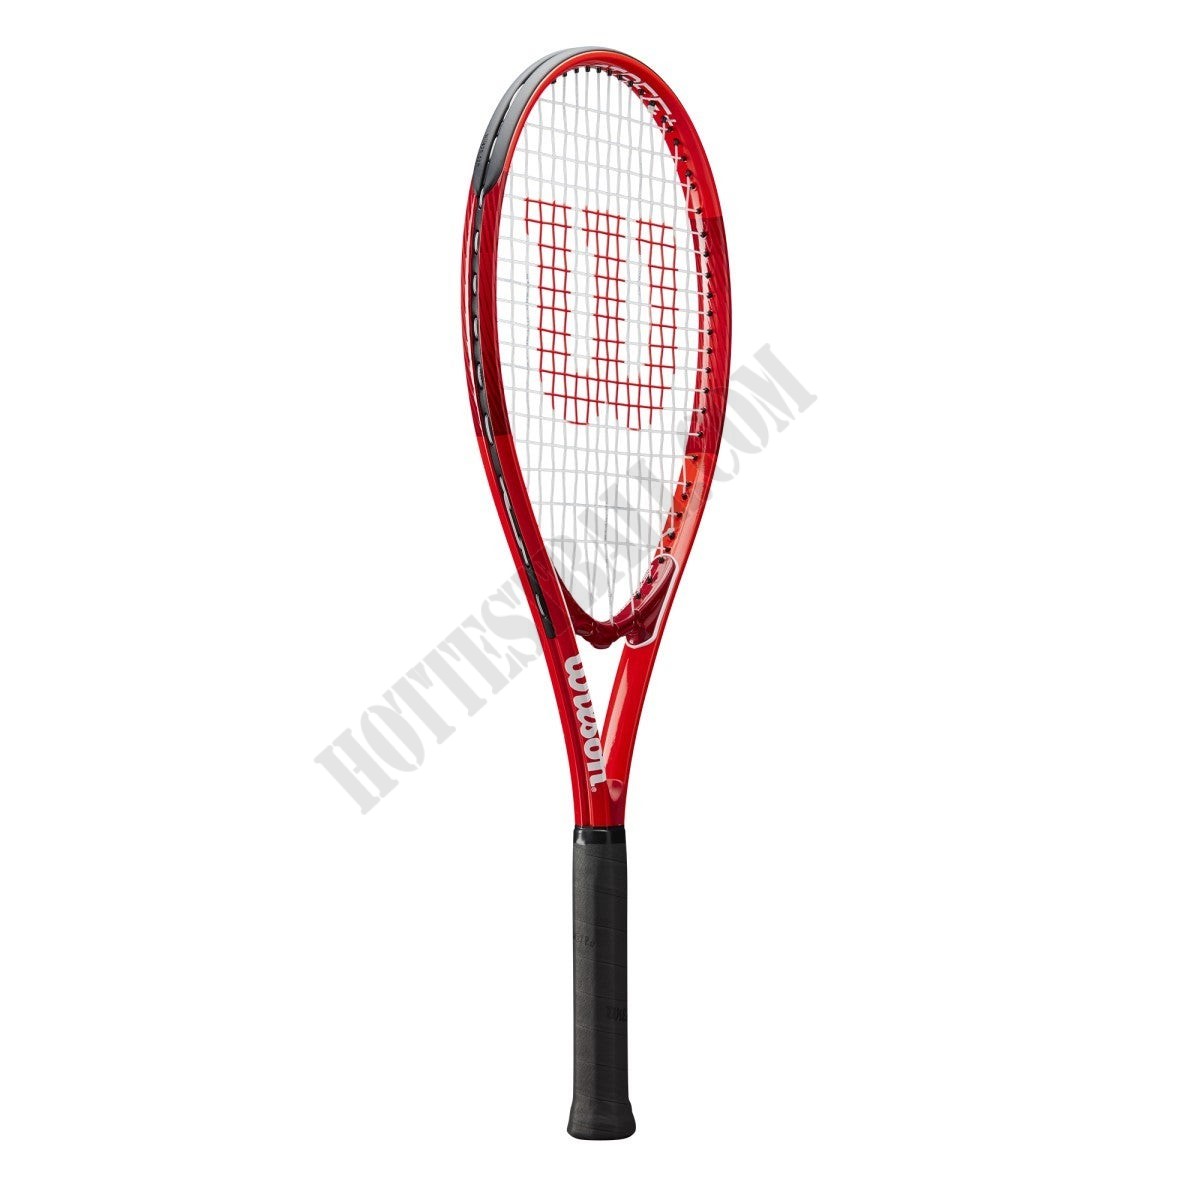 Pro Staff Precision XL 110 Tennis Racket - Wilson Discount Store - -1